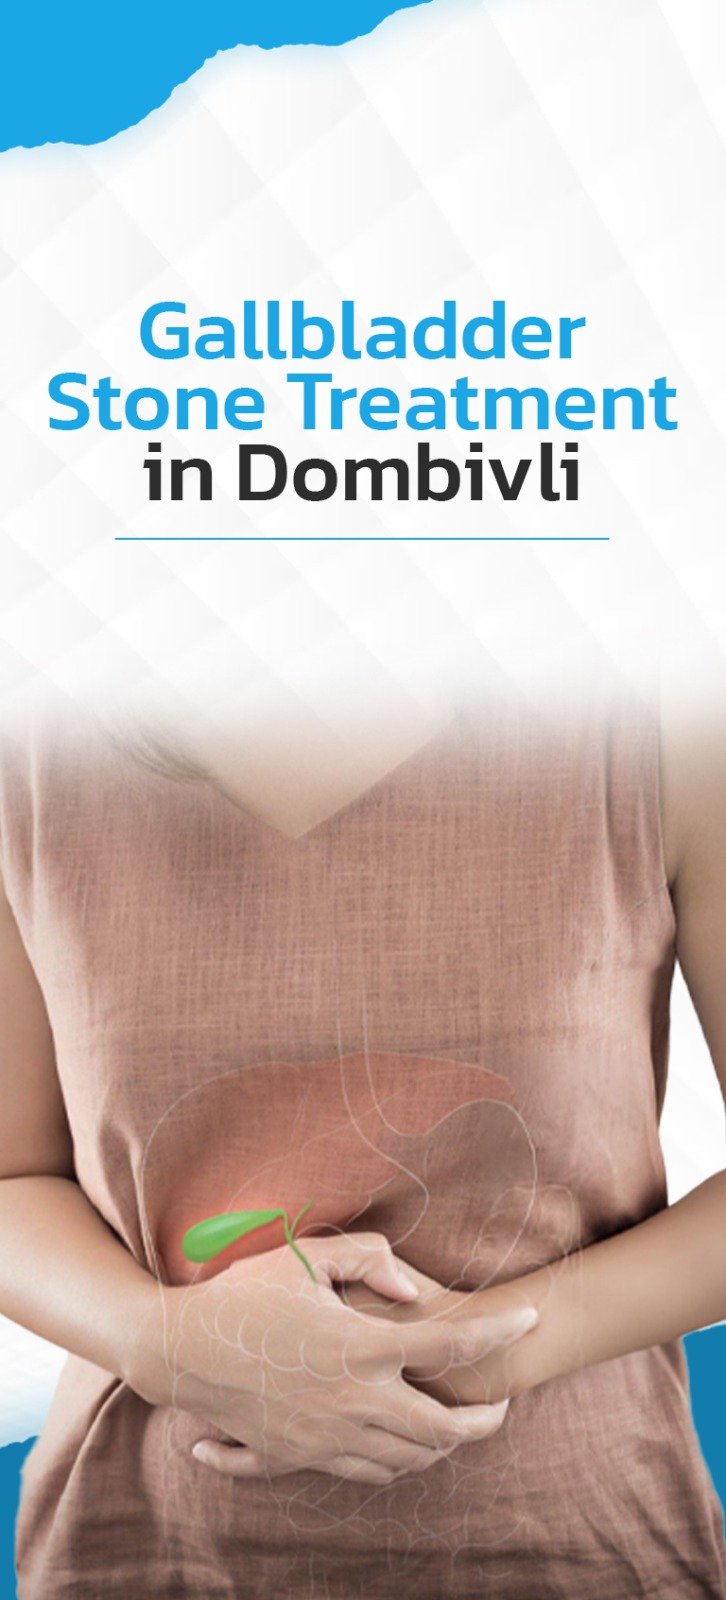 Gallbladder Stone Treatment in Dombivli